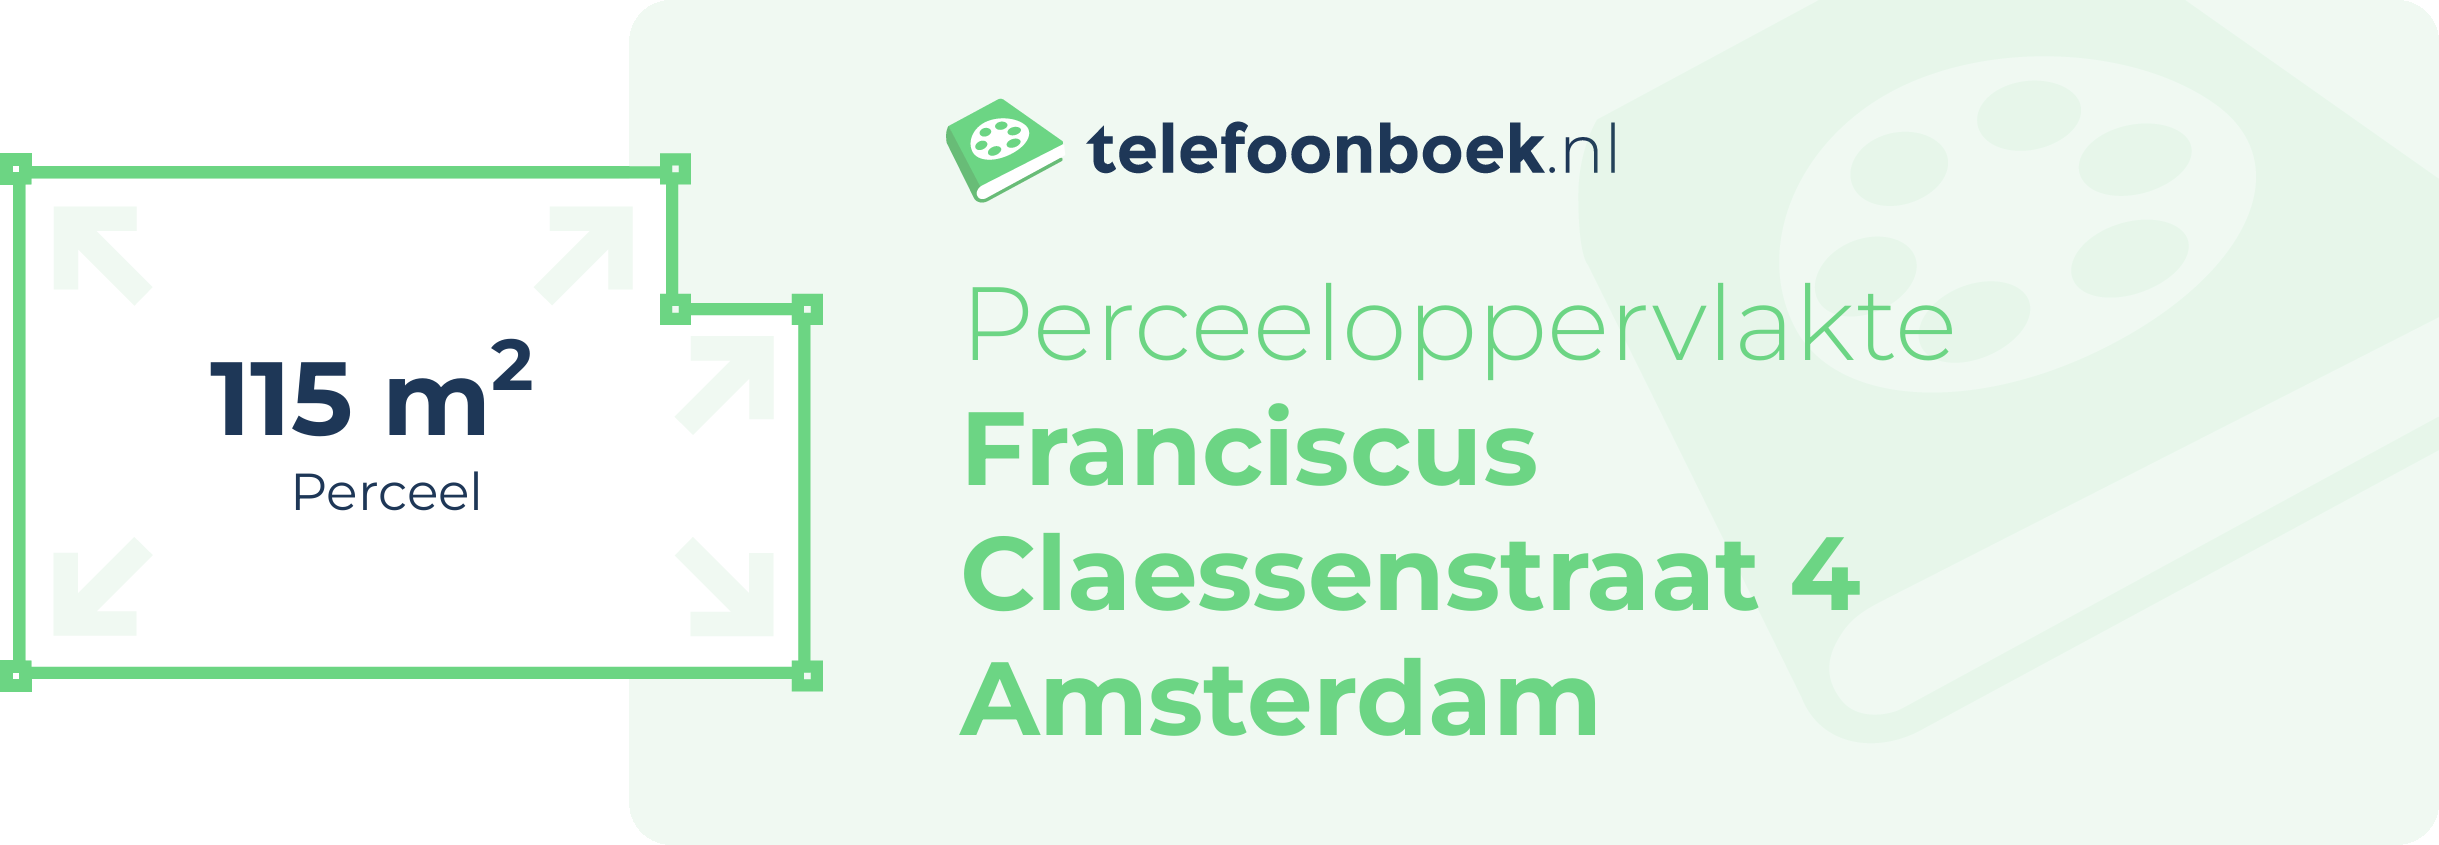 Perceeloppervlakte Franciscus Claessenstraat 4 Amsterdam